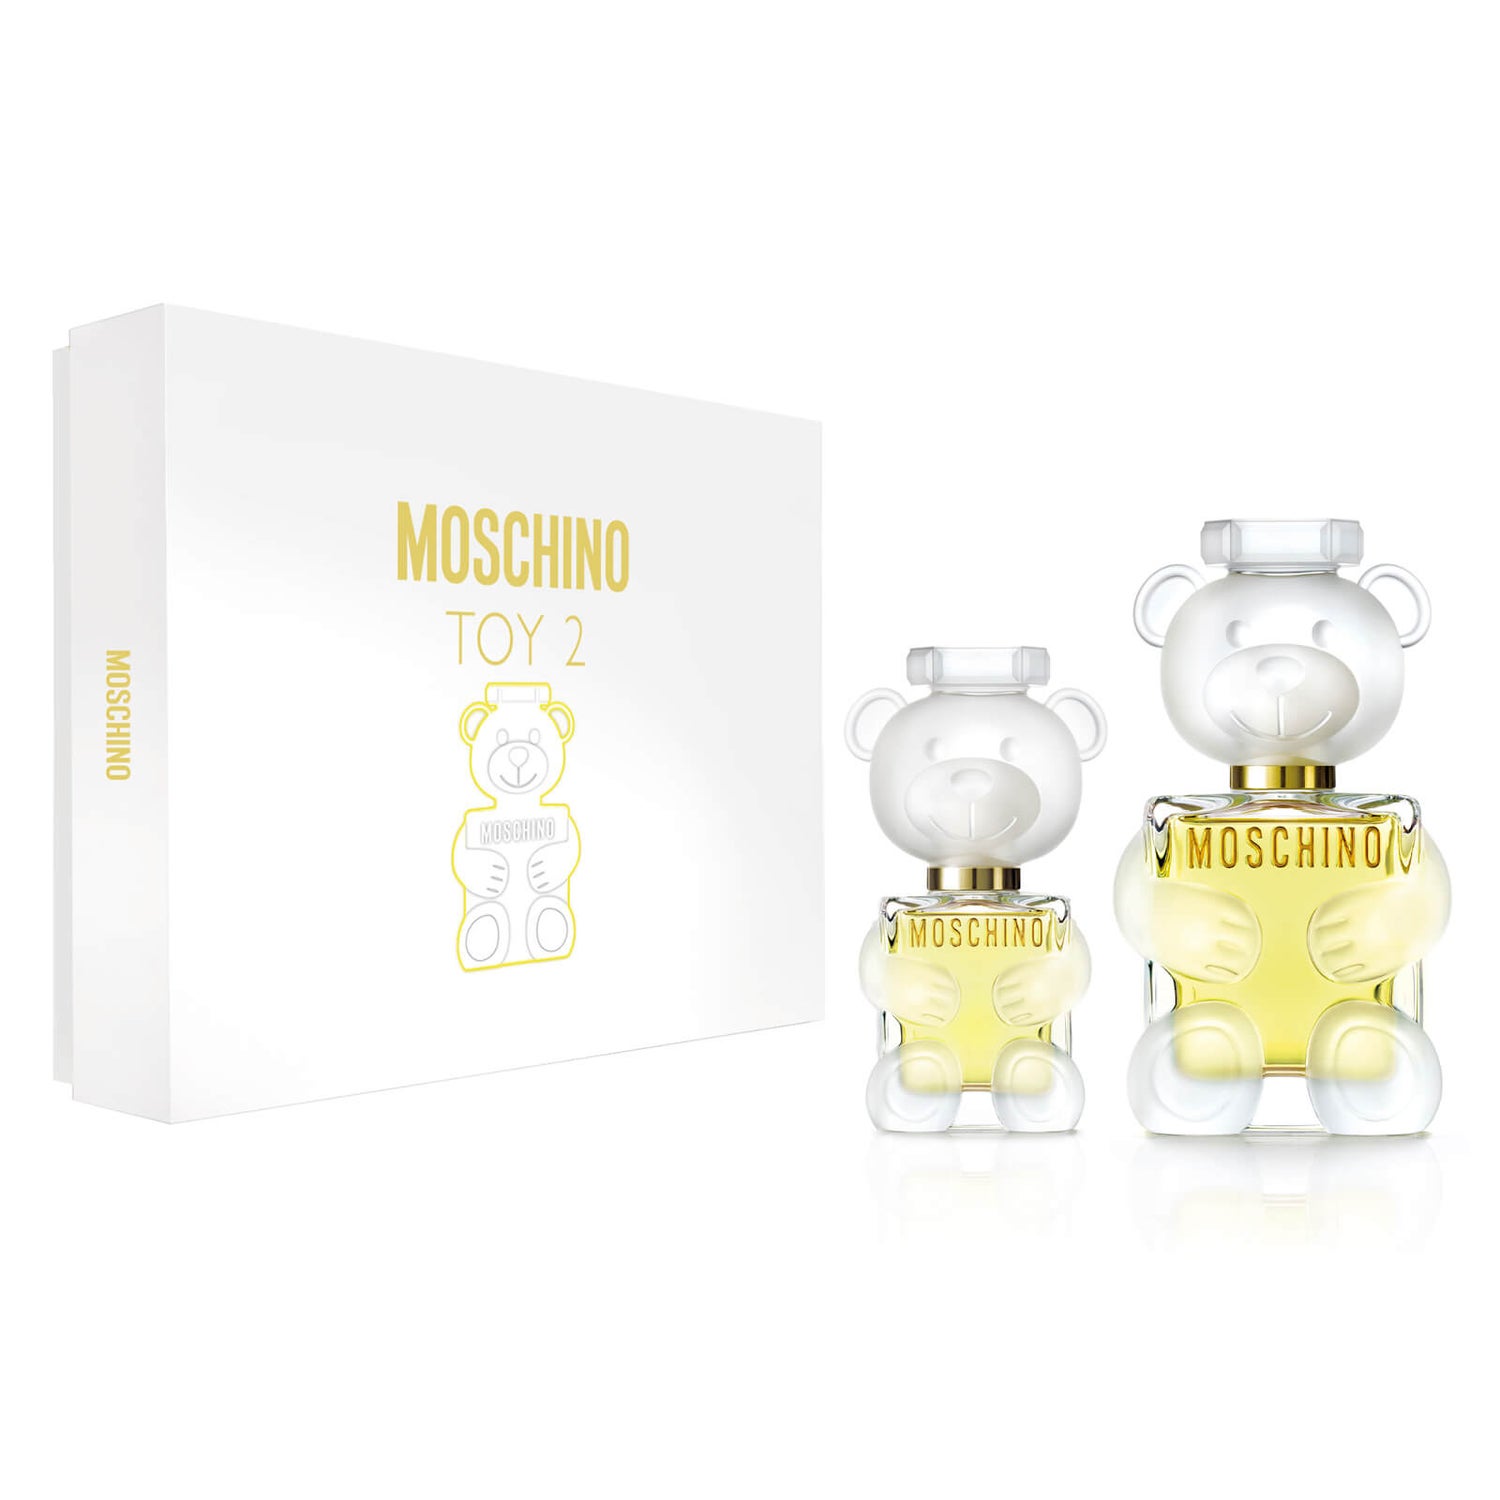 Moschino Toy 2 X20 Eau de Parfum 100ml Set - Spedizione GRATIS